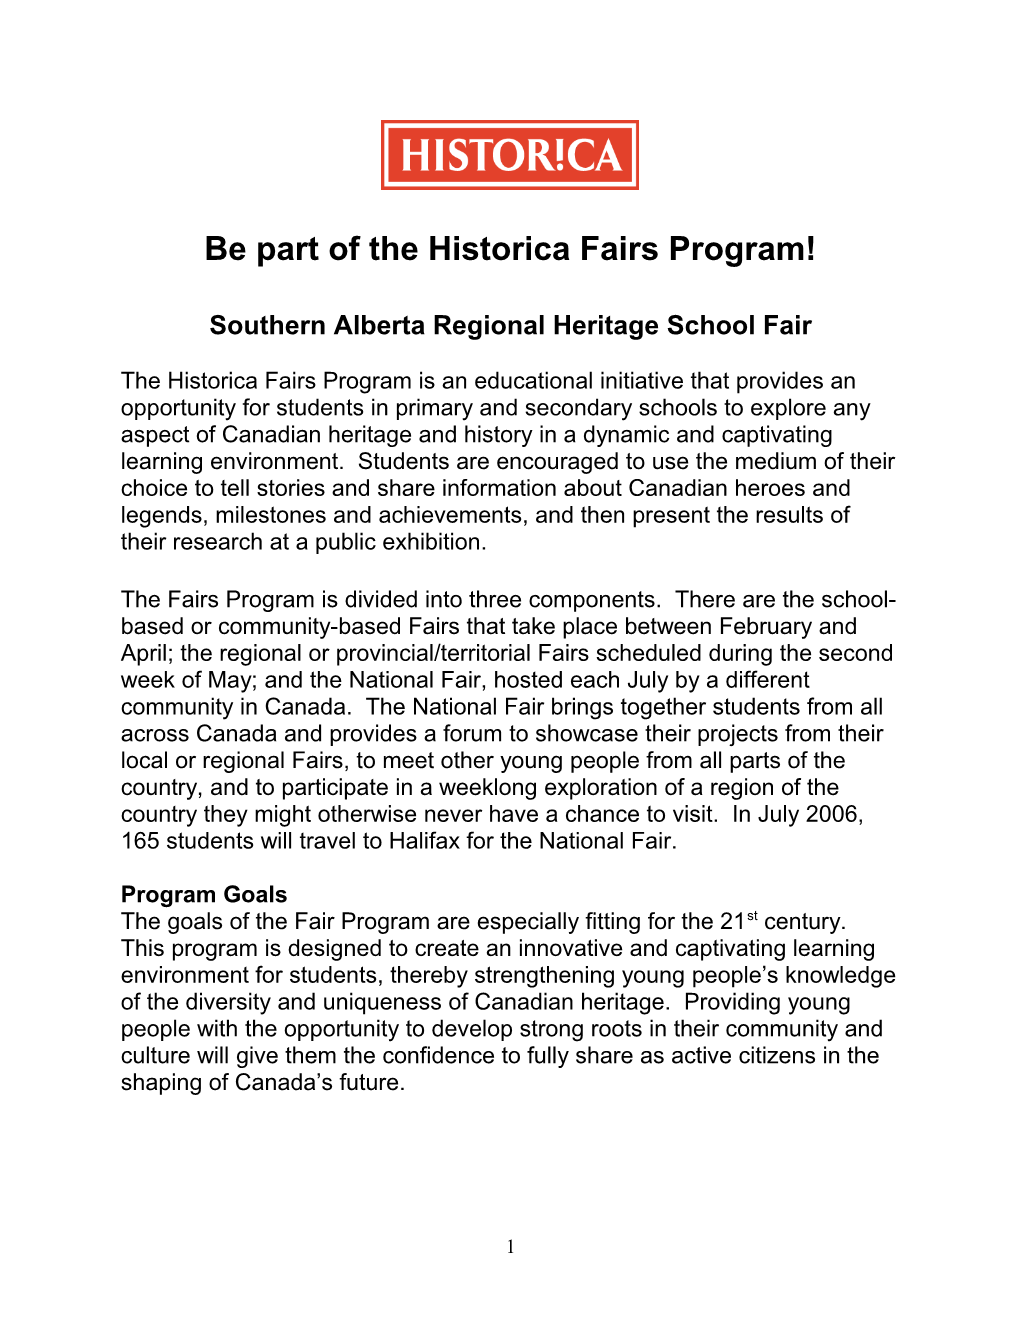 Southern Alberta Heritage School Fair